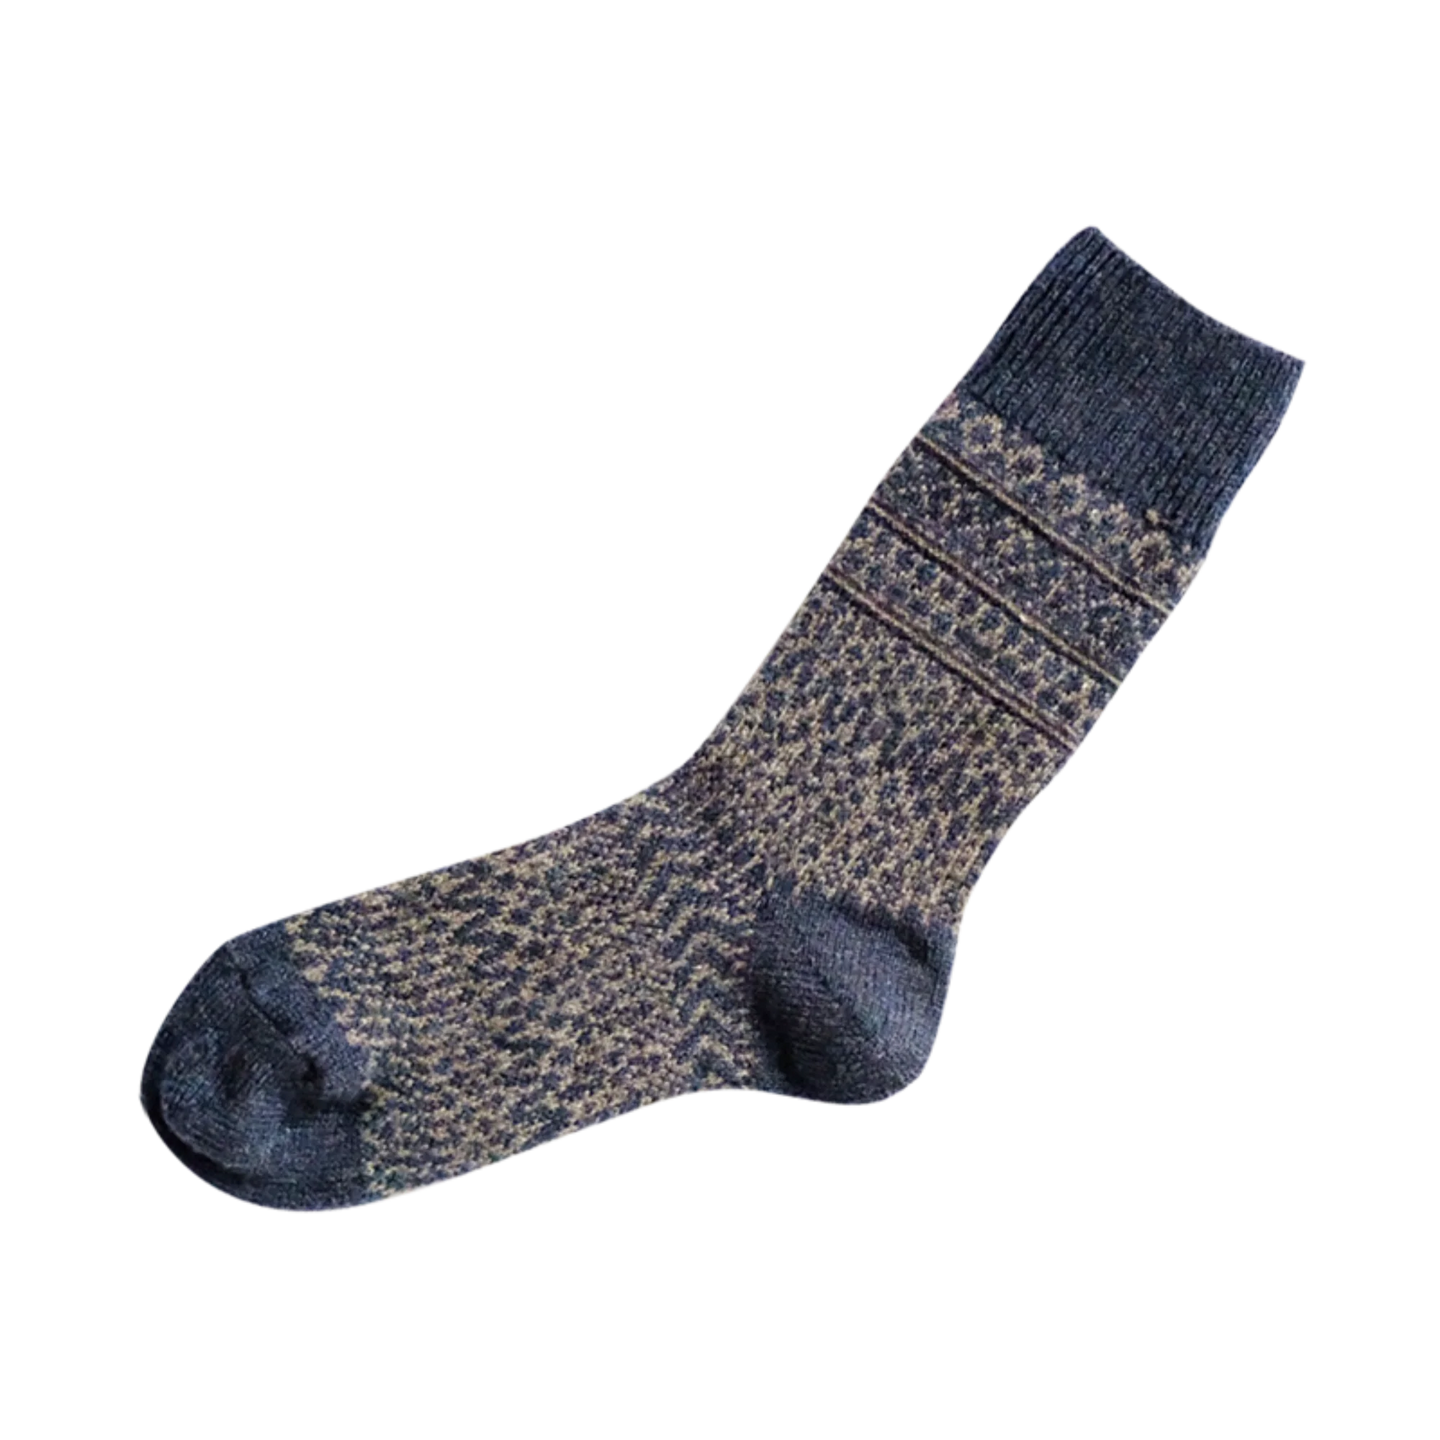 Nishigushi Kutsushita Oslo wool jacquard fairisle sock in navy with grey pattern.